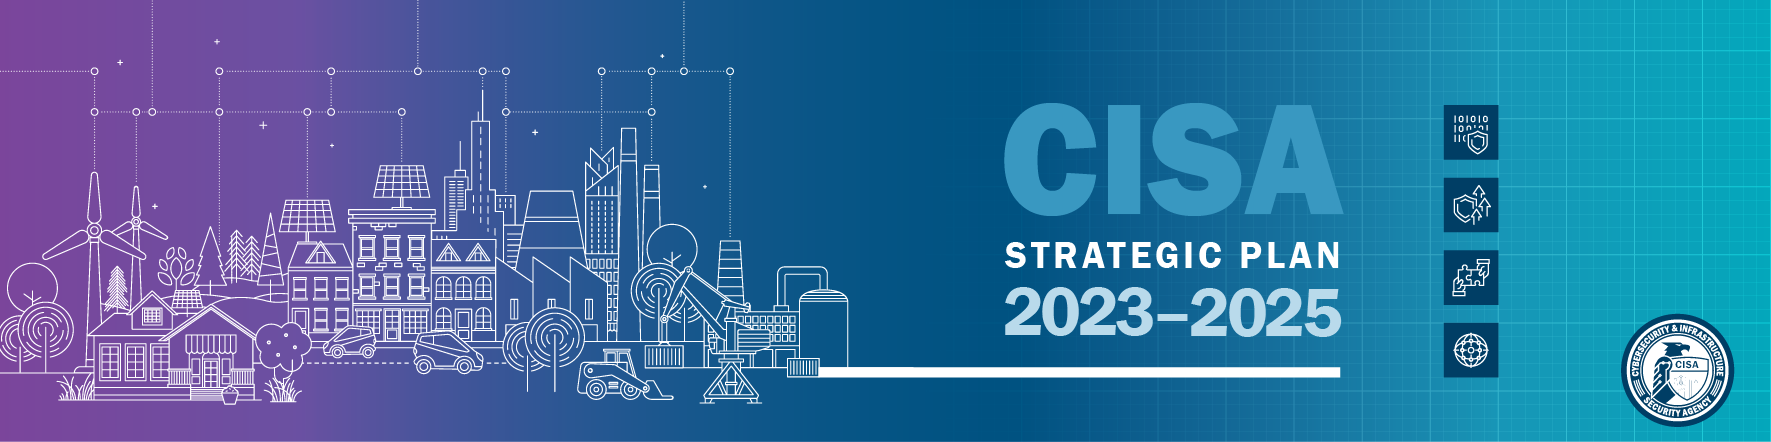 CISA Strategic Plan 2023-2025